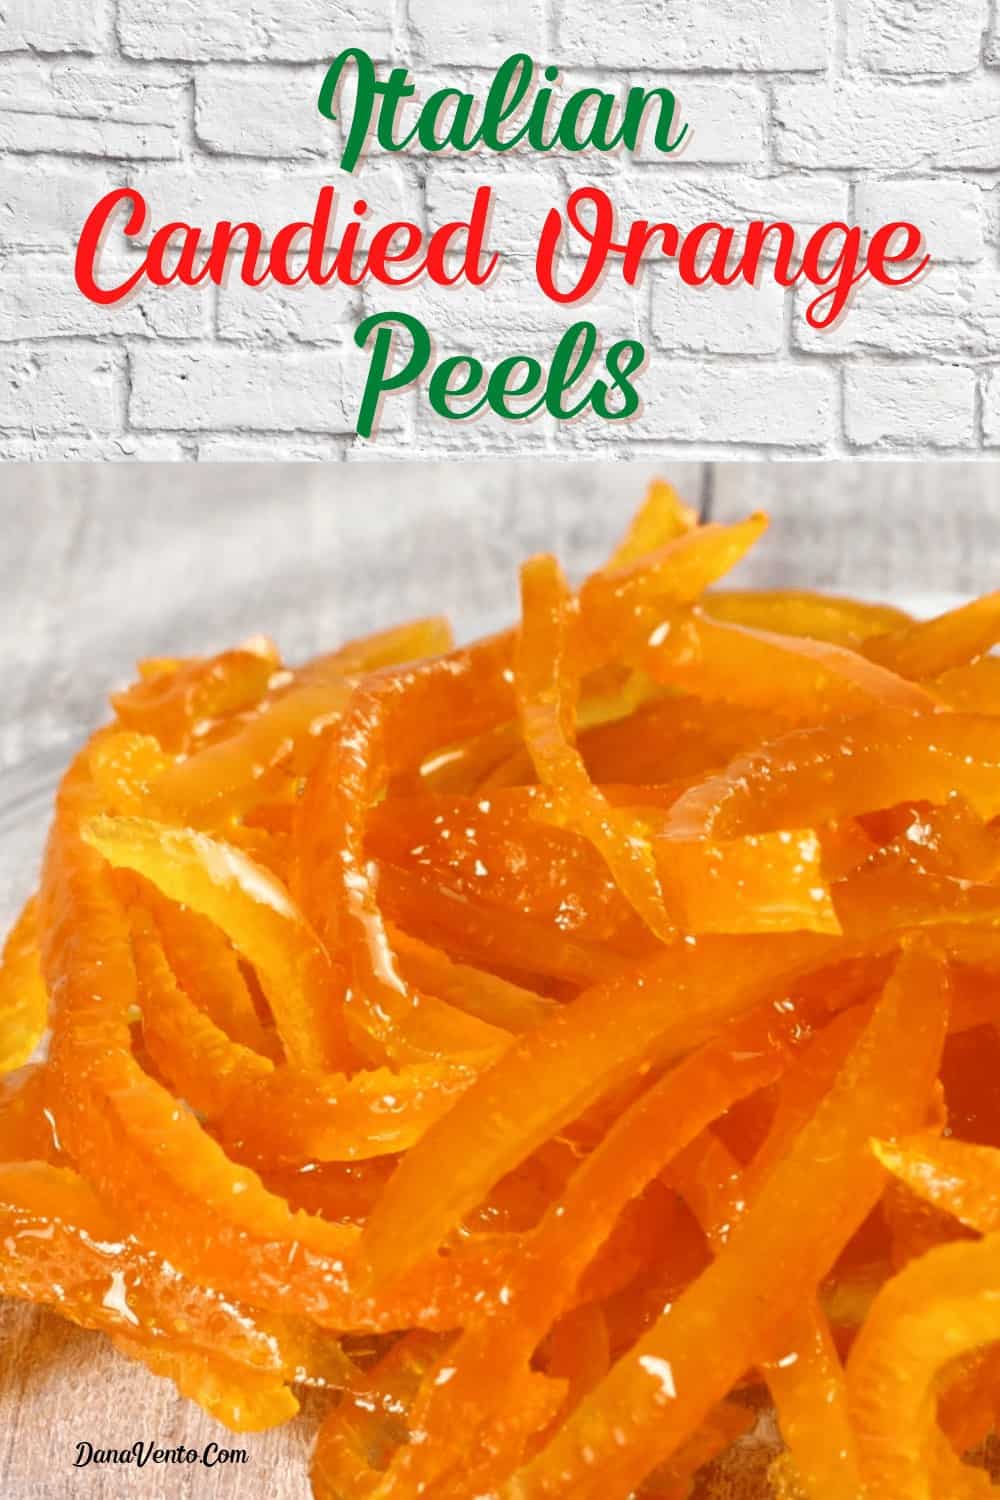 Italiain Candied Orange Peels 